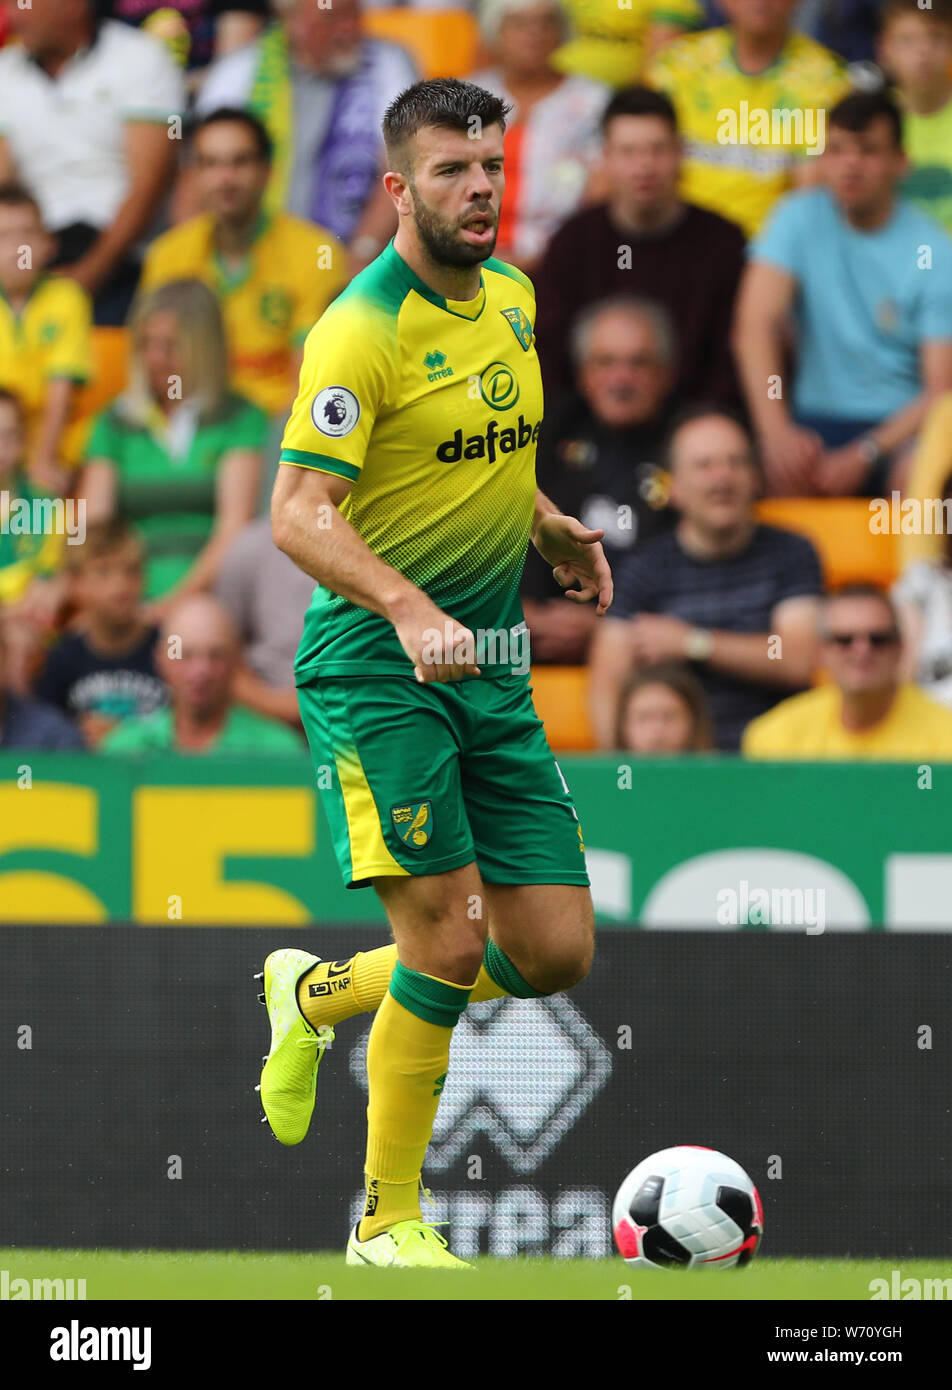 Grant Hanley of Norwich City - Norwich City v Toulouse, Pre-Season Friendly, Carrow Road, Norwich, UK - 3rd August 2019 Stock Photo